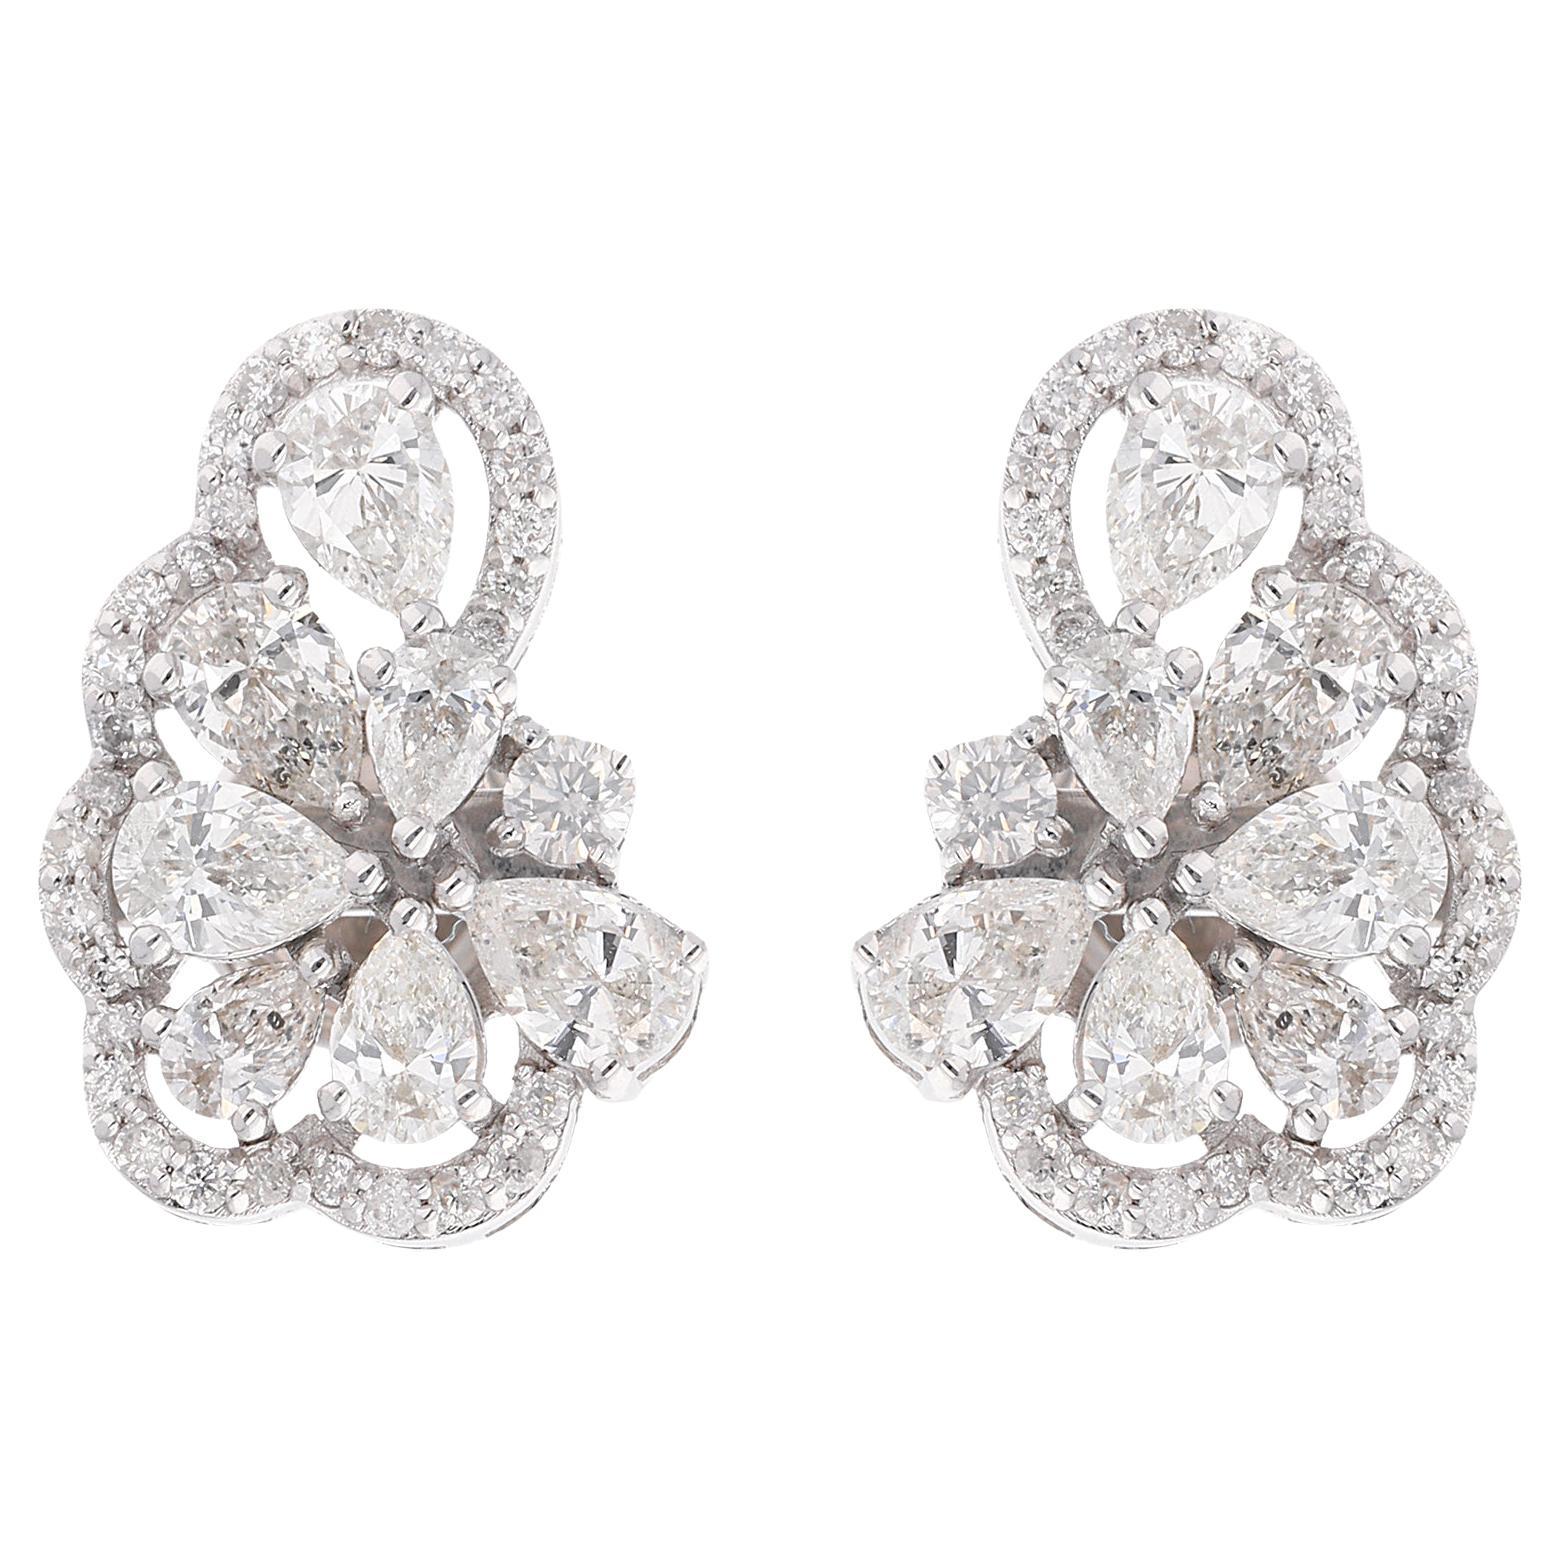 2.76 Ct. Pear & Round Diamond Stud Earrings 14 Karat White Gold Handmade Jewelry